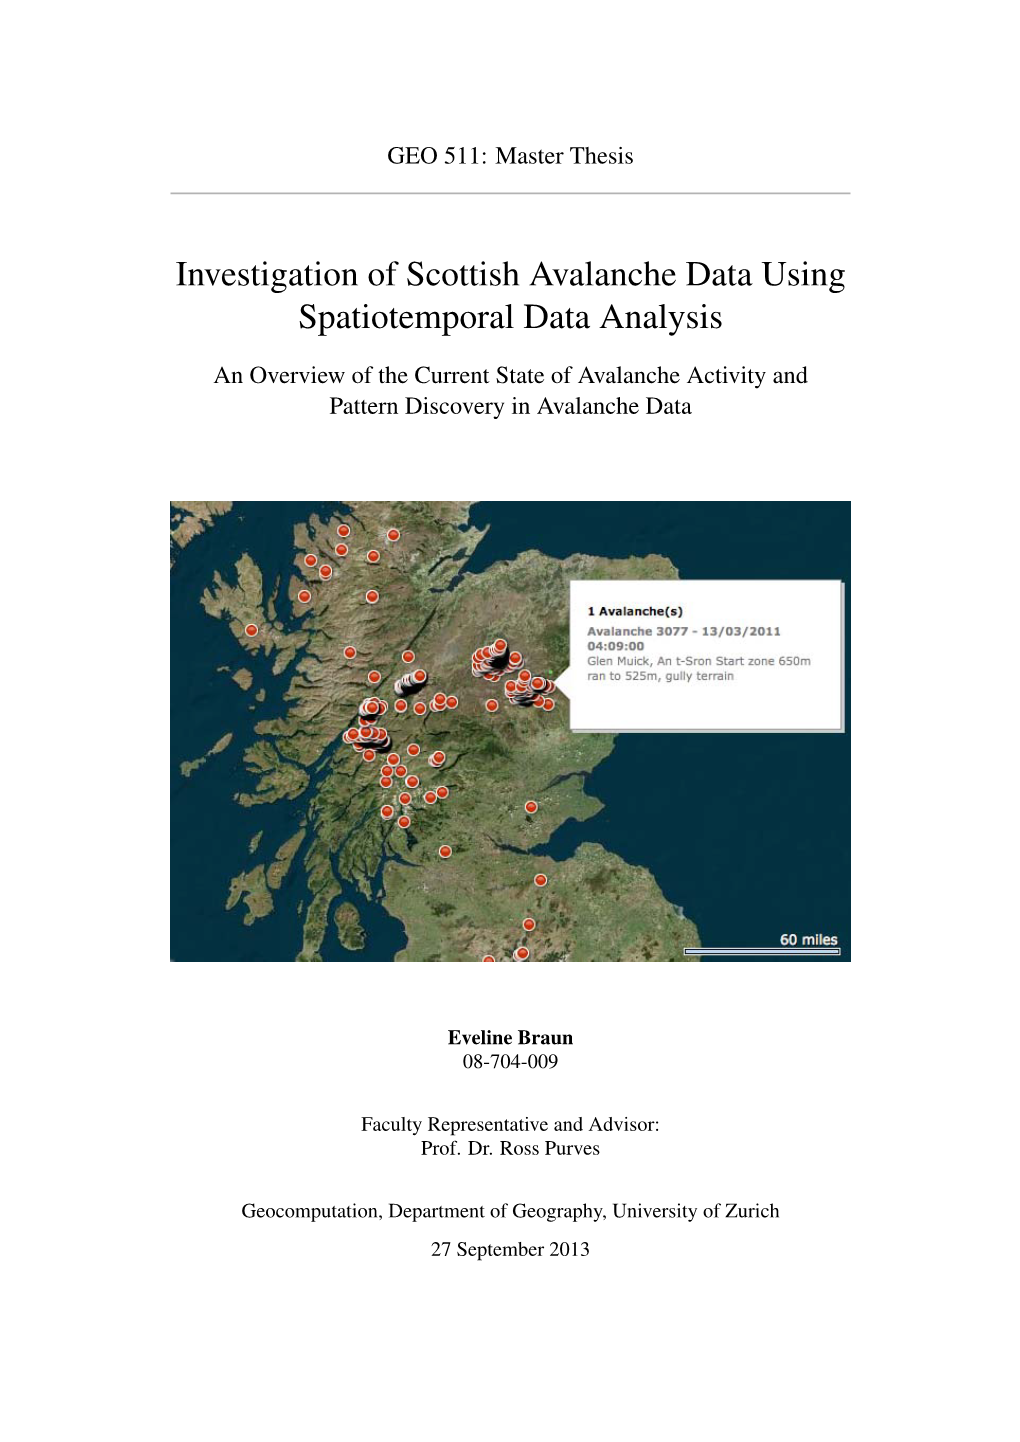 Investigation of Scottish Avalanche Data Using Spatiotemporal Data Analysis